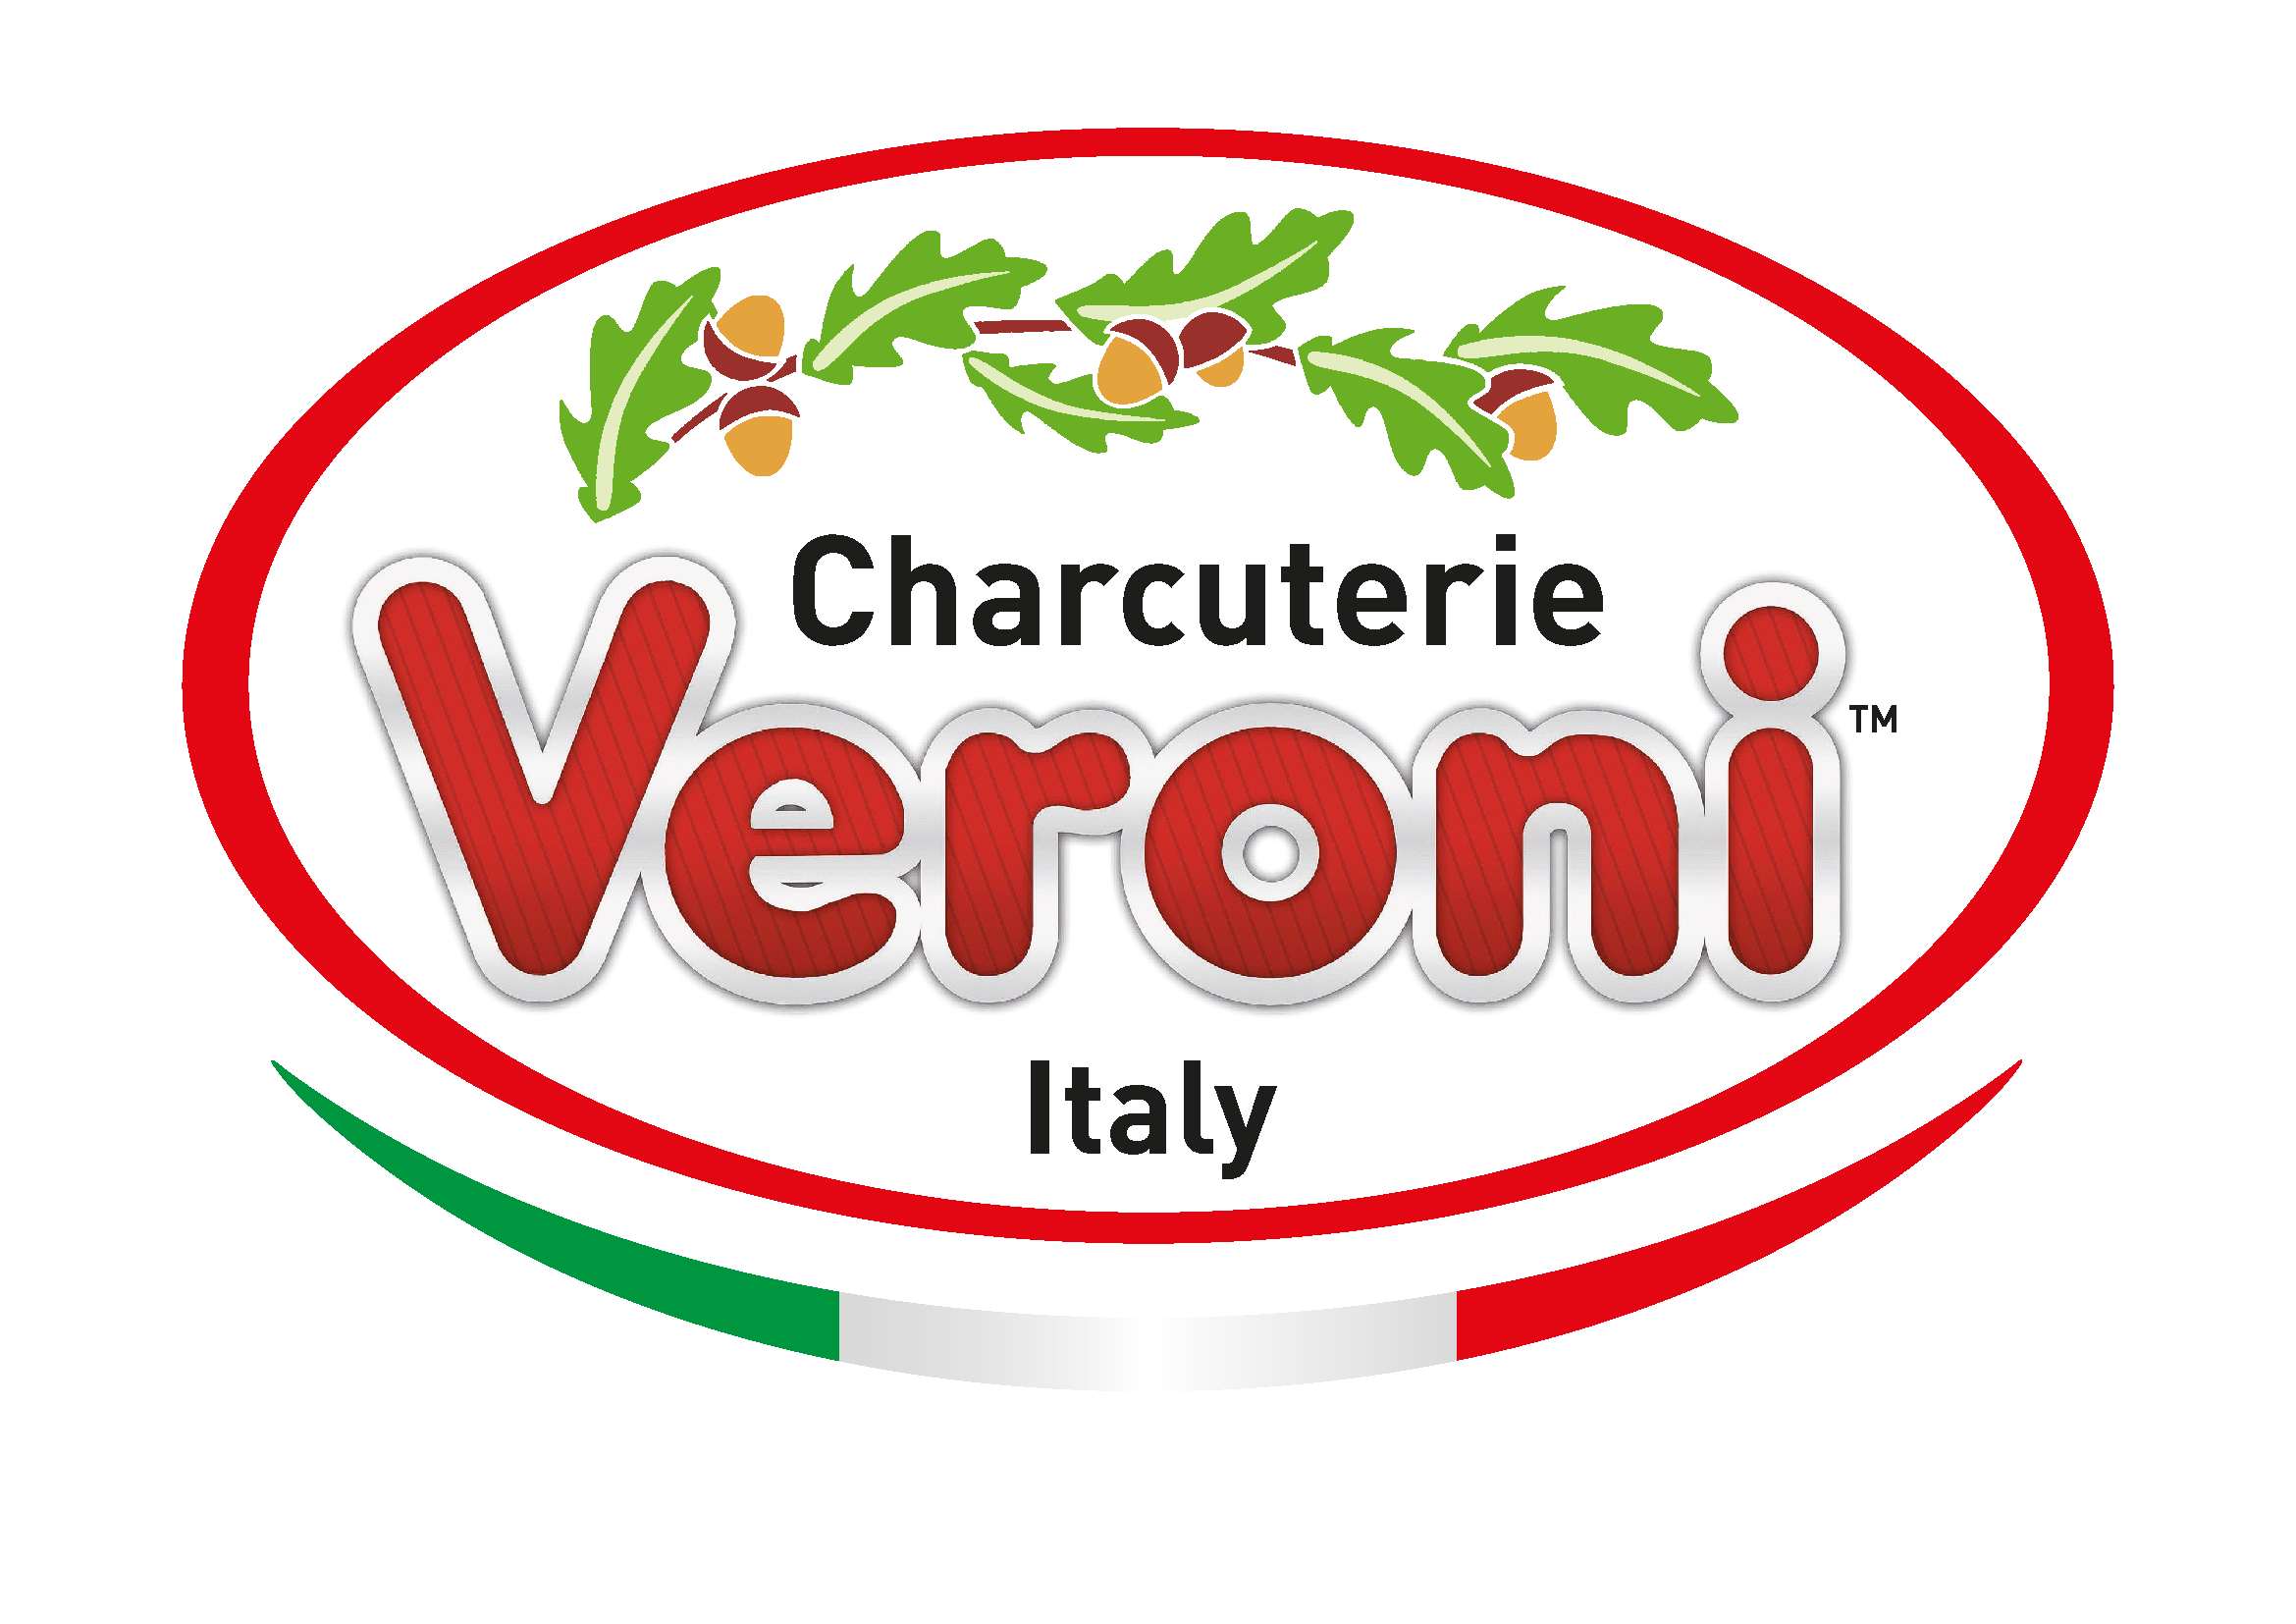 Veroni Charcuterie logo